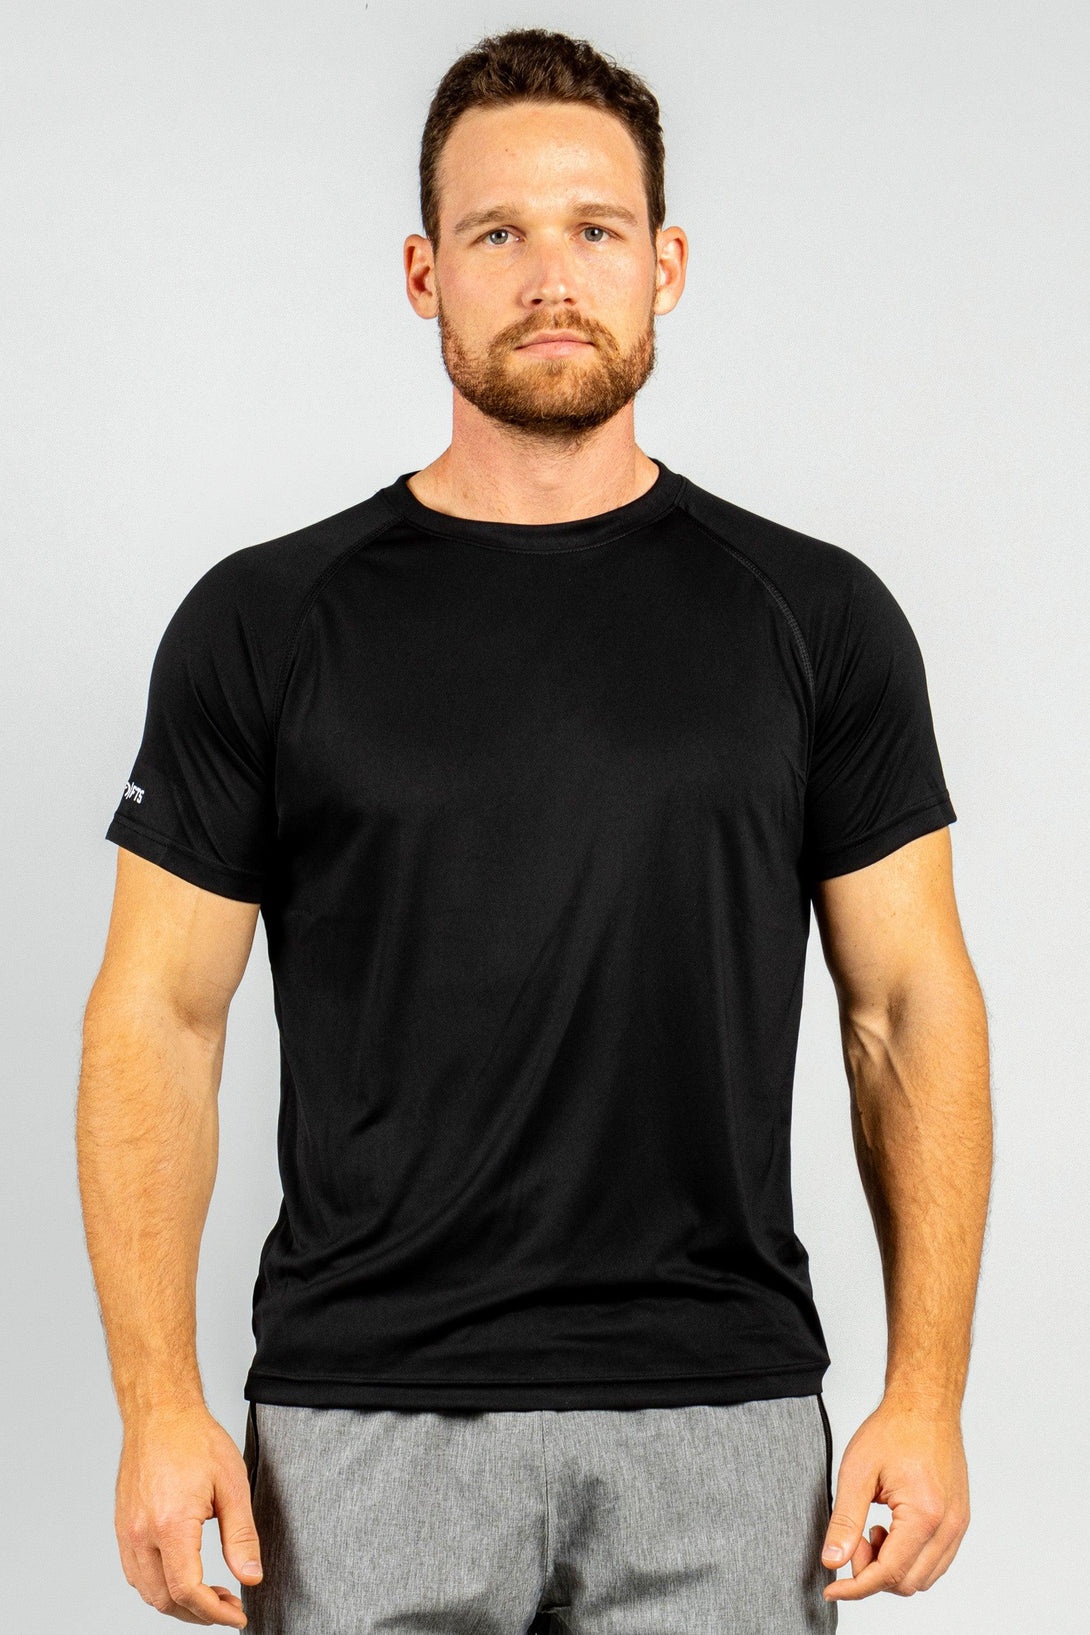 Performance T-Shirts | WHITE - BLACK - DARK GREY Pack of 3 - FTS